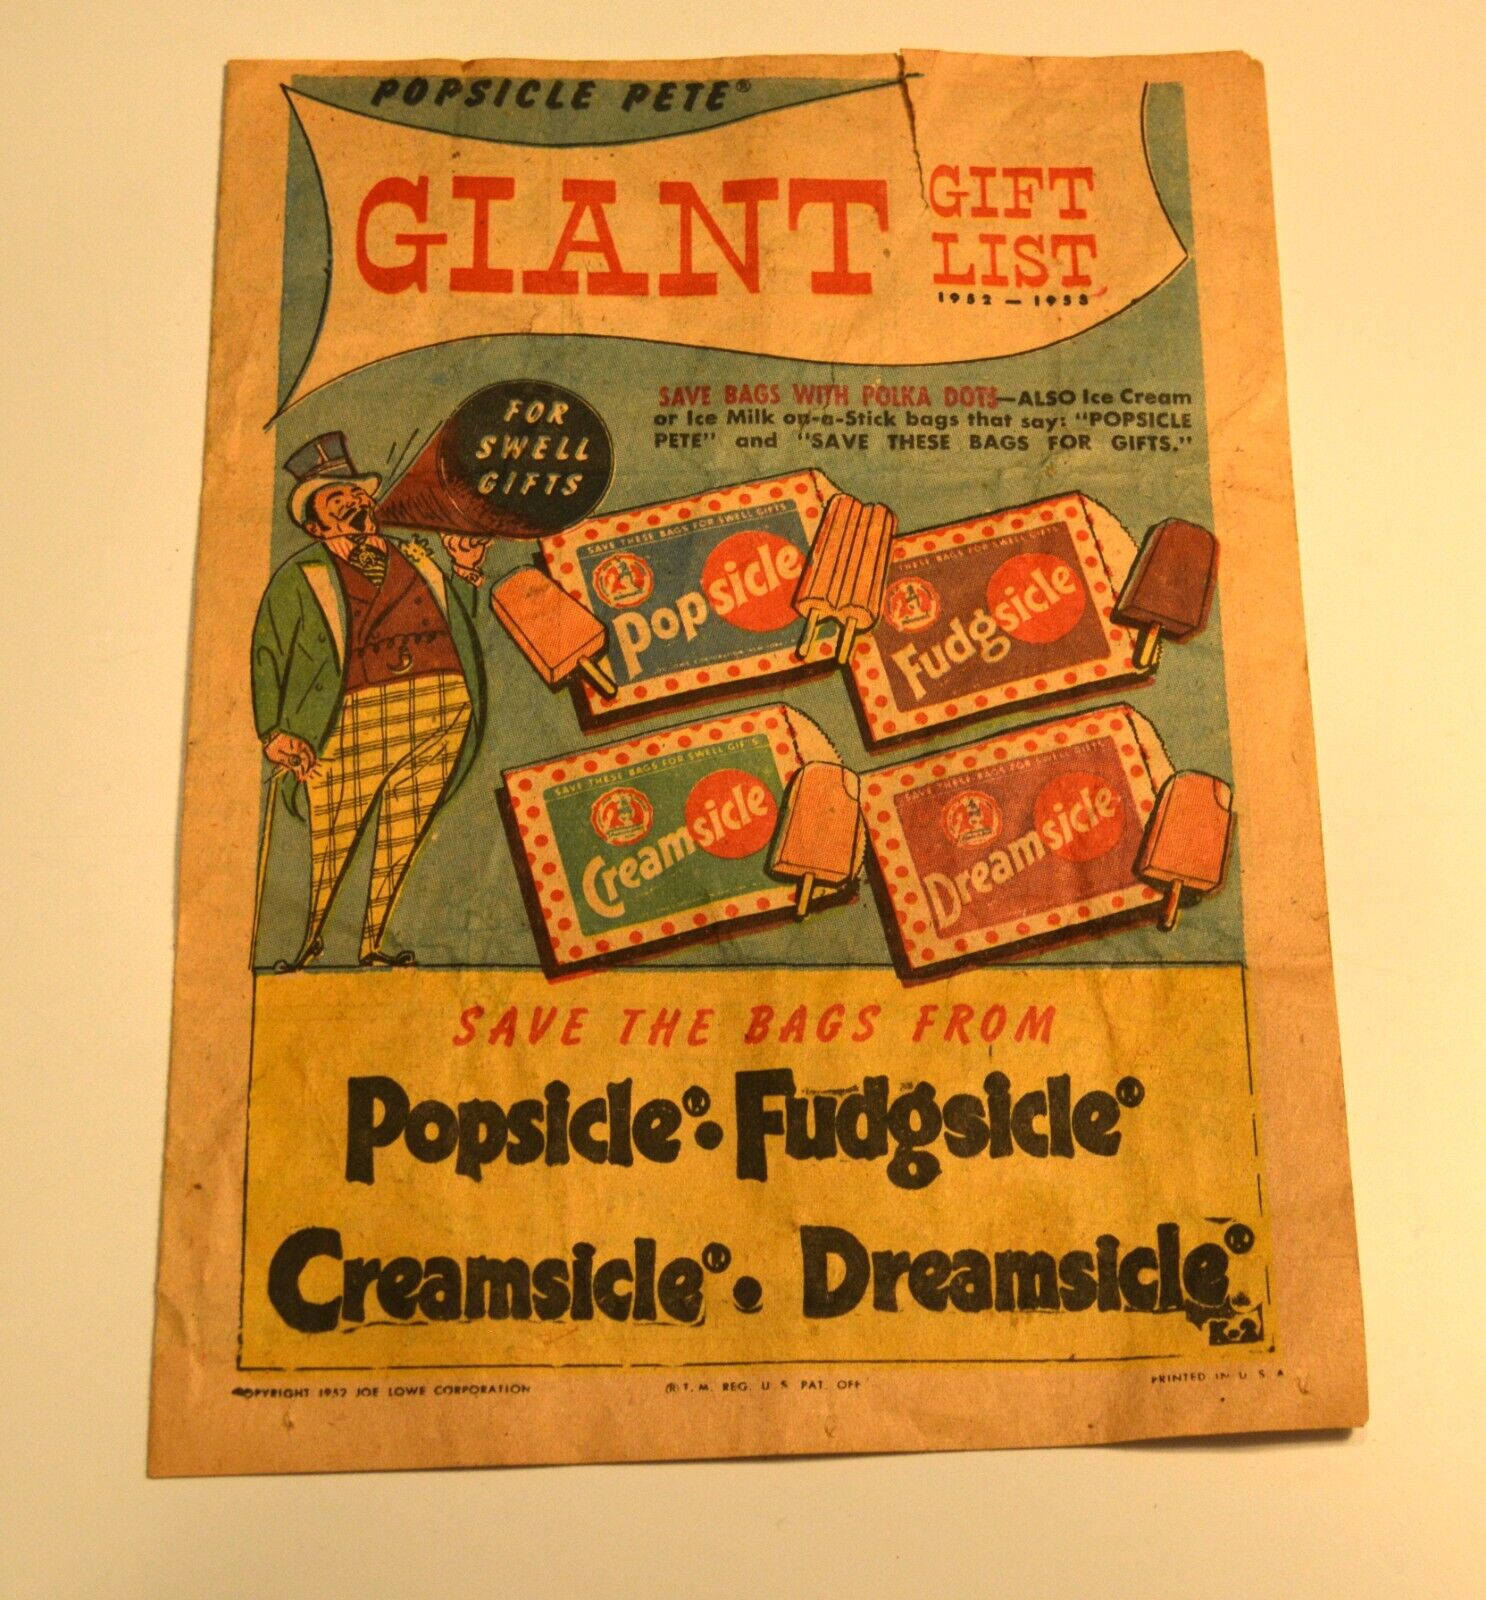 Popsicle Pete’s 1952-1953 “ Giant Gift List “ Brochure